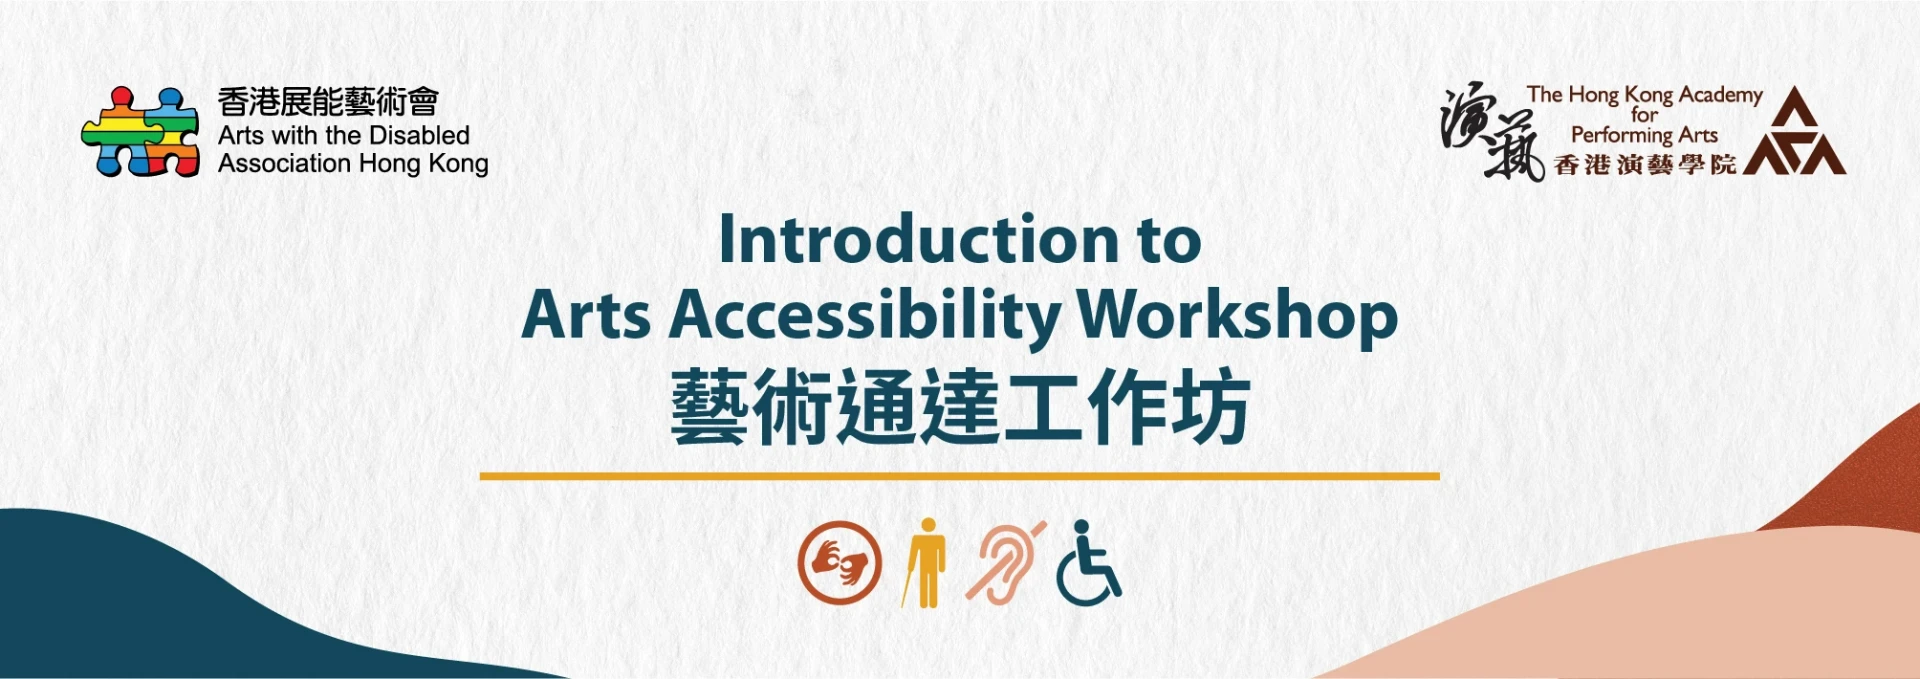 2021/22 Arts Accessibility Workshop